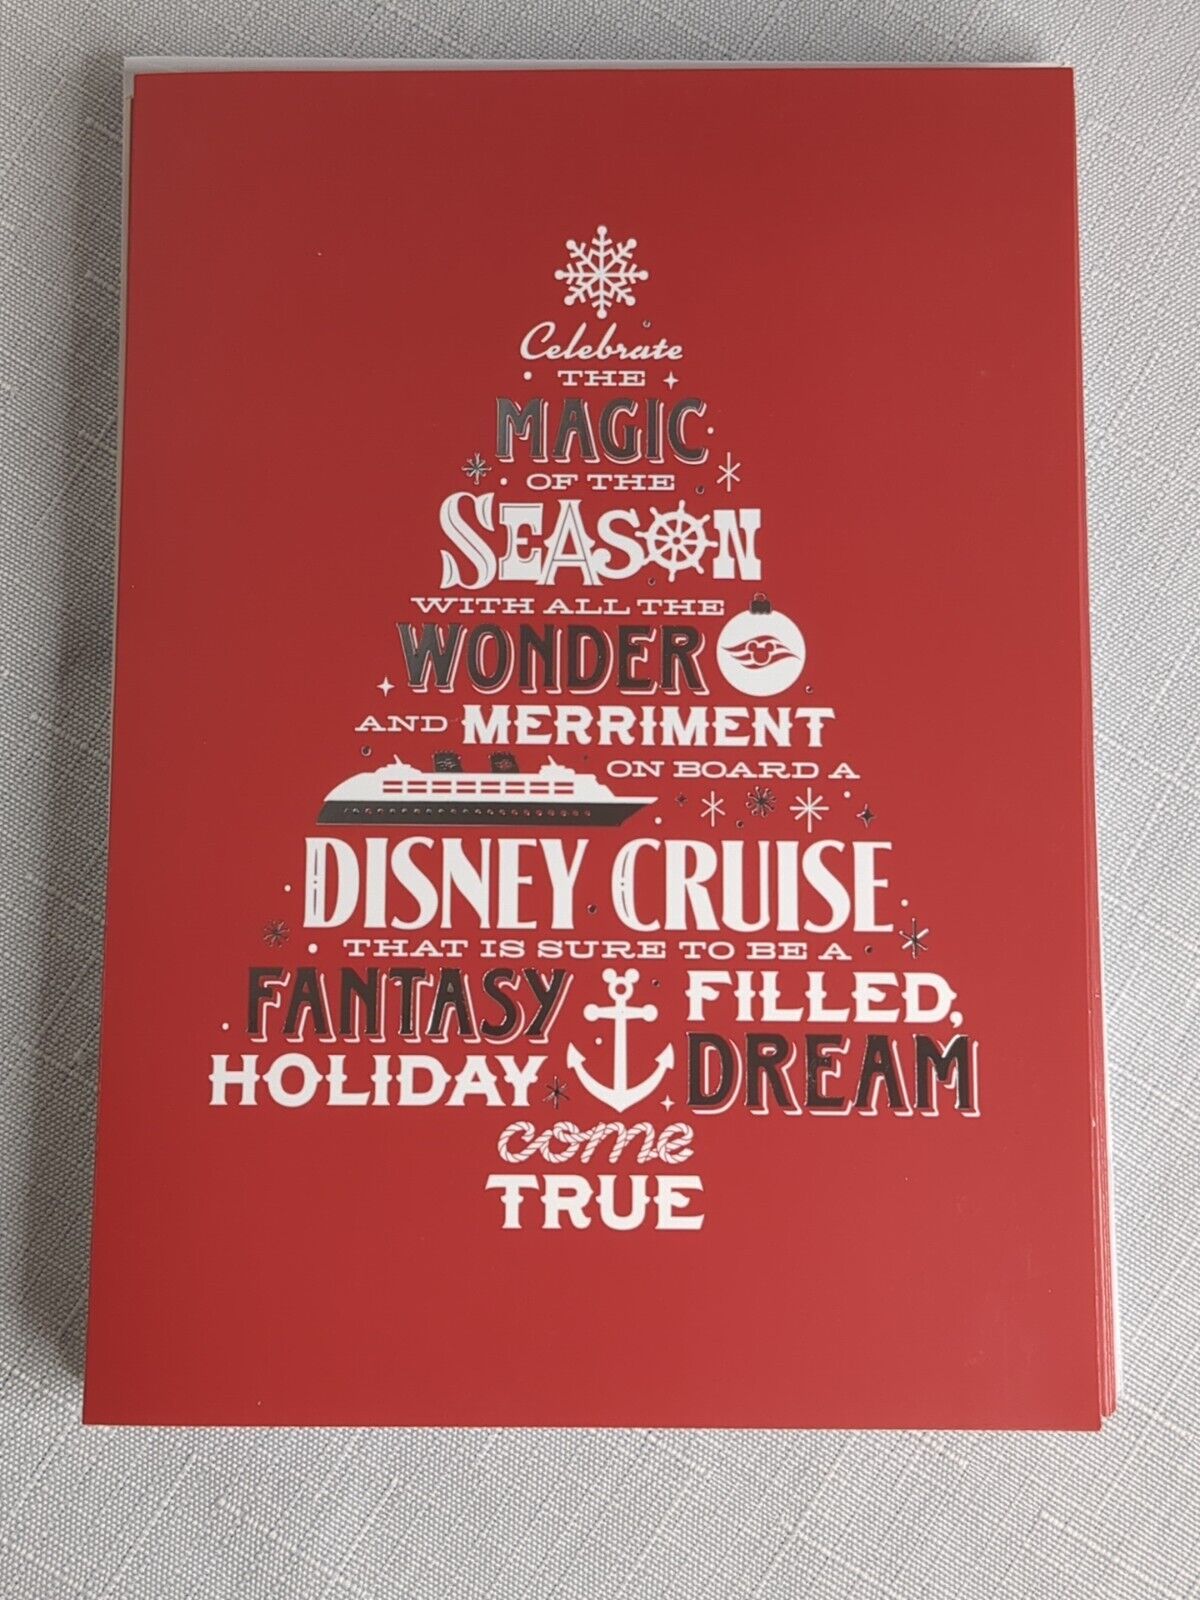 Lot Of 10 Disney Cruise Line Happy Holidays Christmas Cards Unused w/ Envelopes